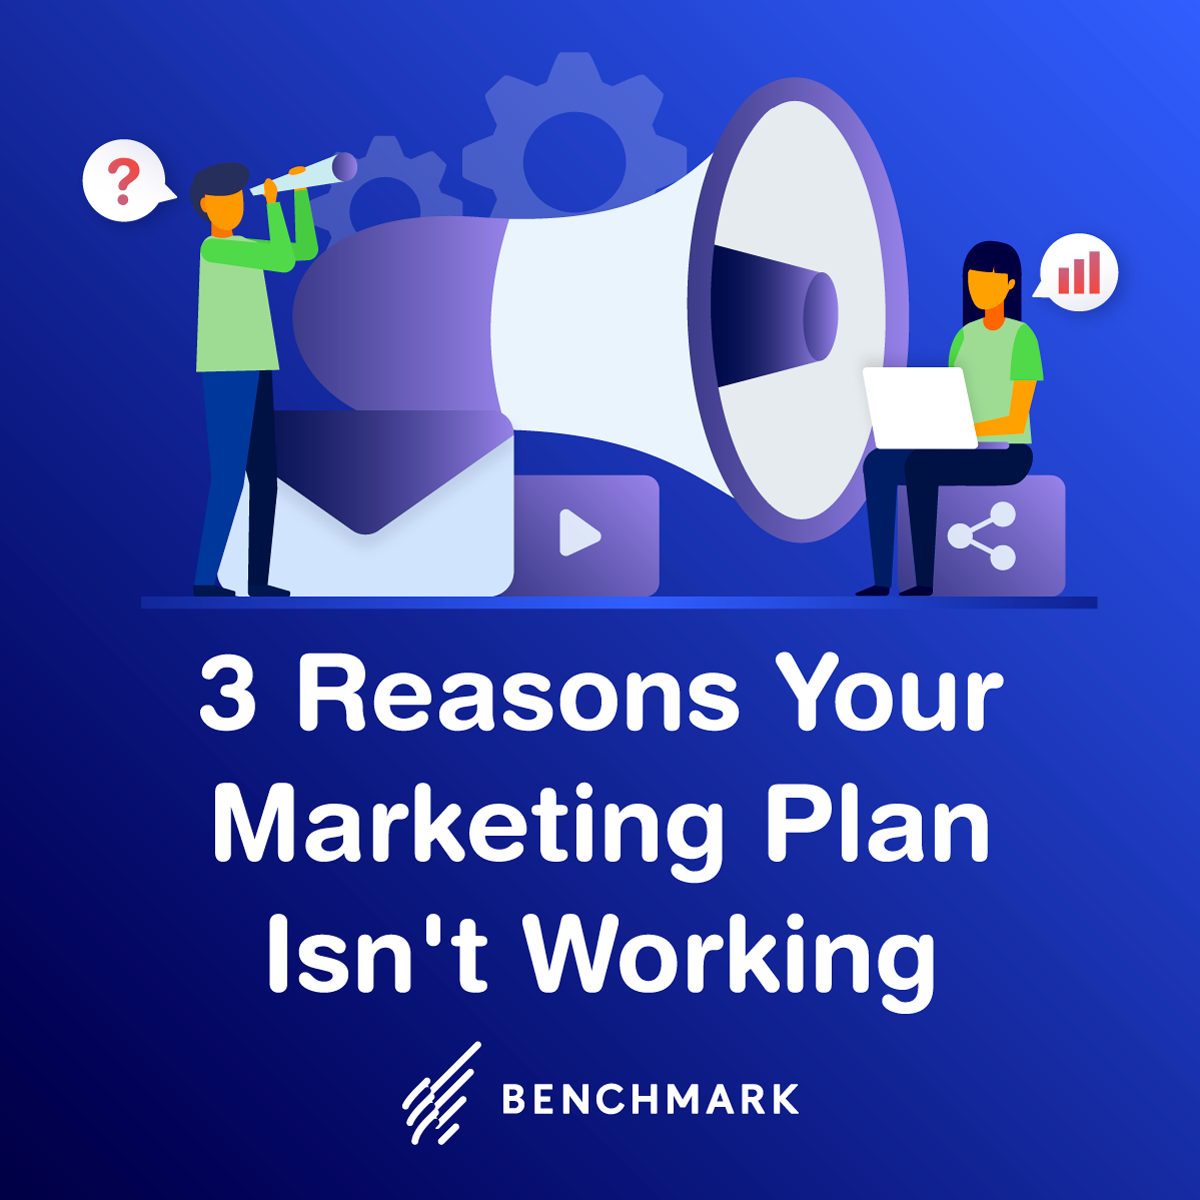 3 Reasons Your Marketing Plan Isn’t Working